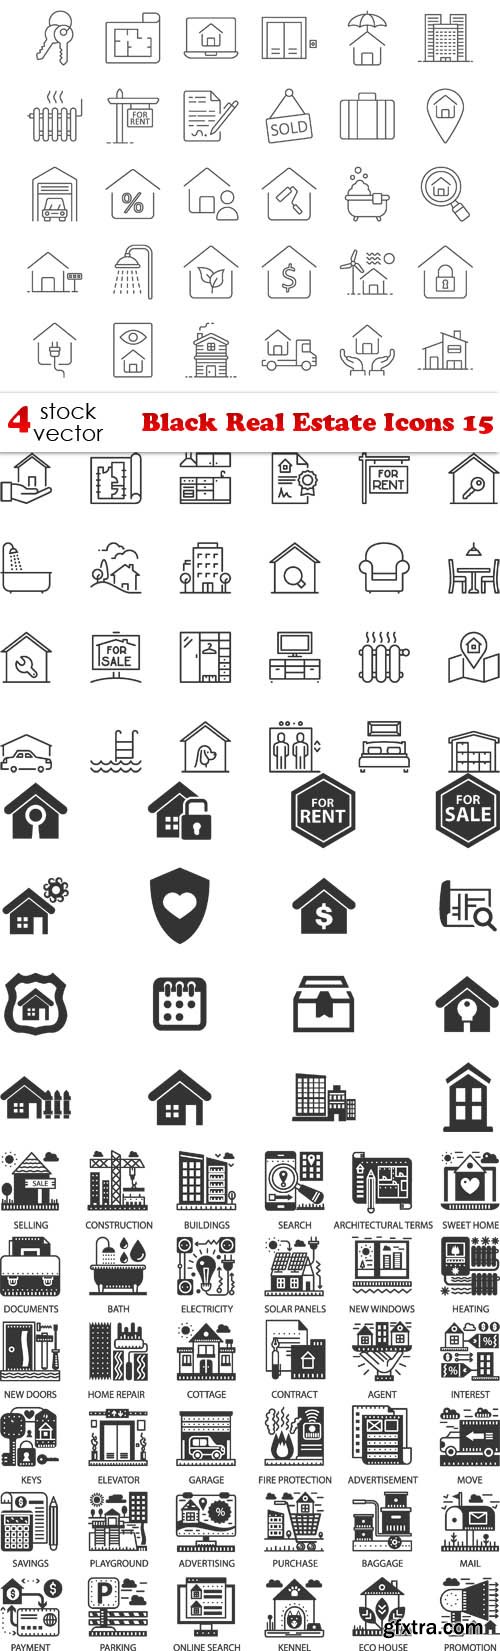 Vectors - Black Real Estate Icons 15